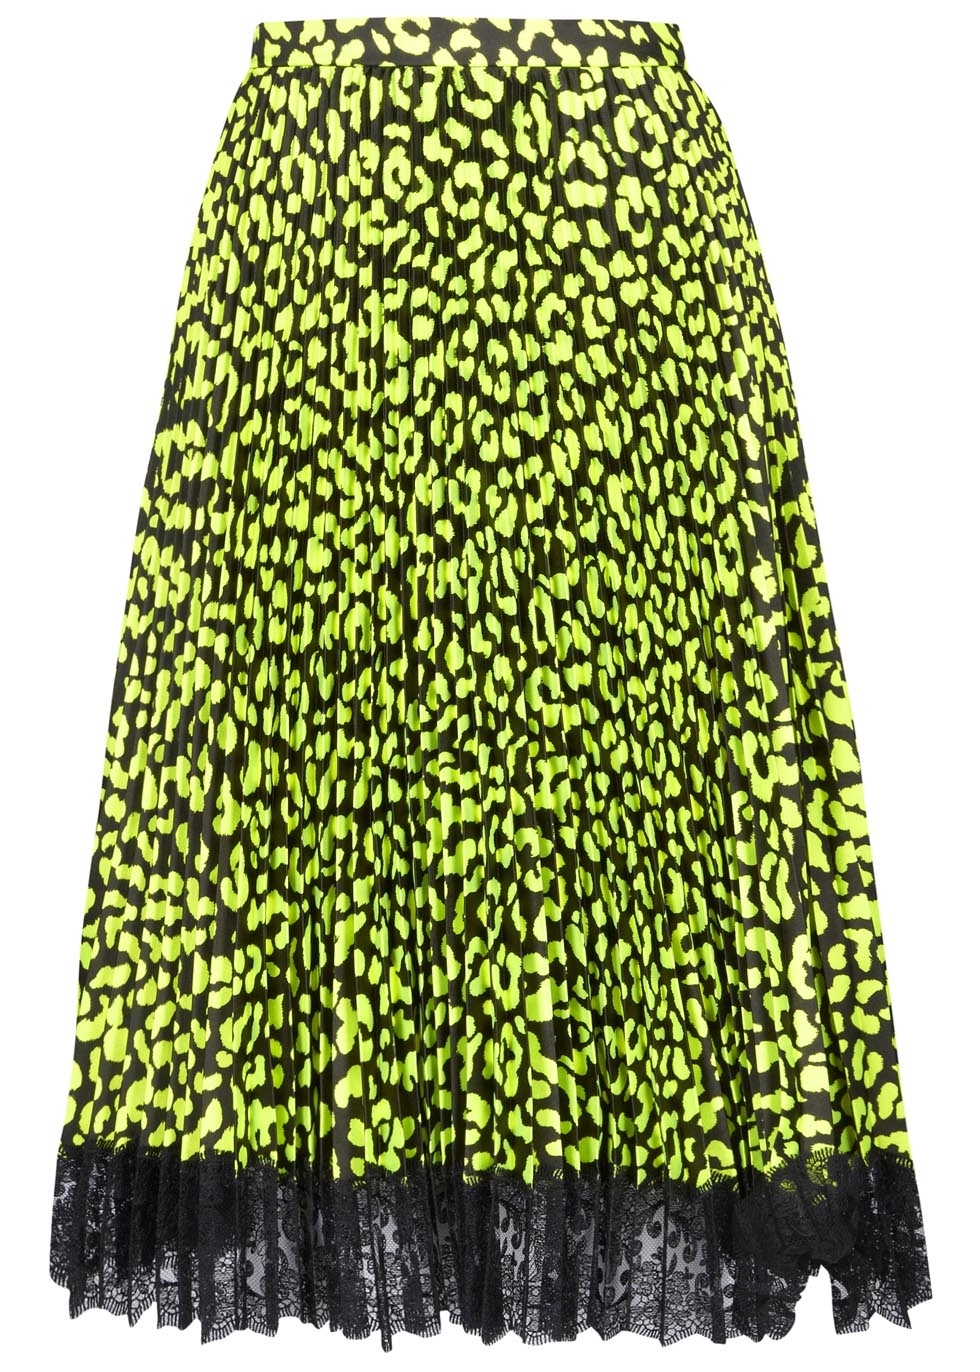 Leopard print pleated satin skirt